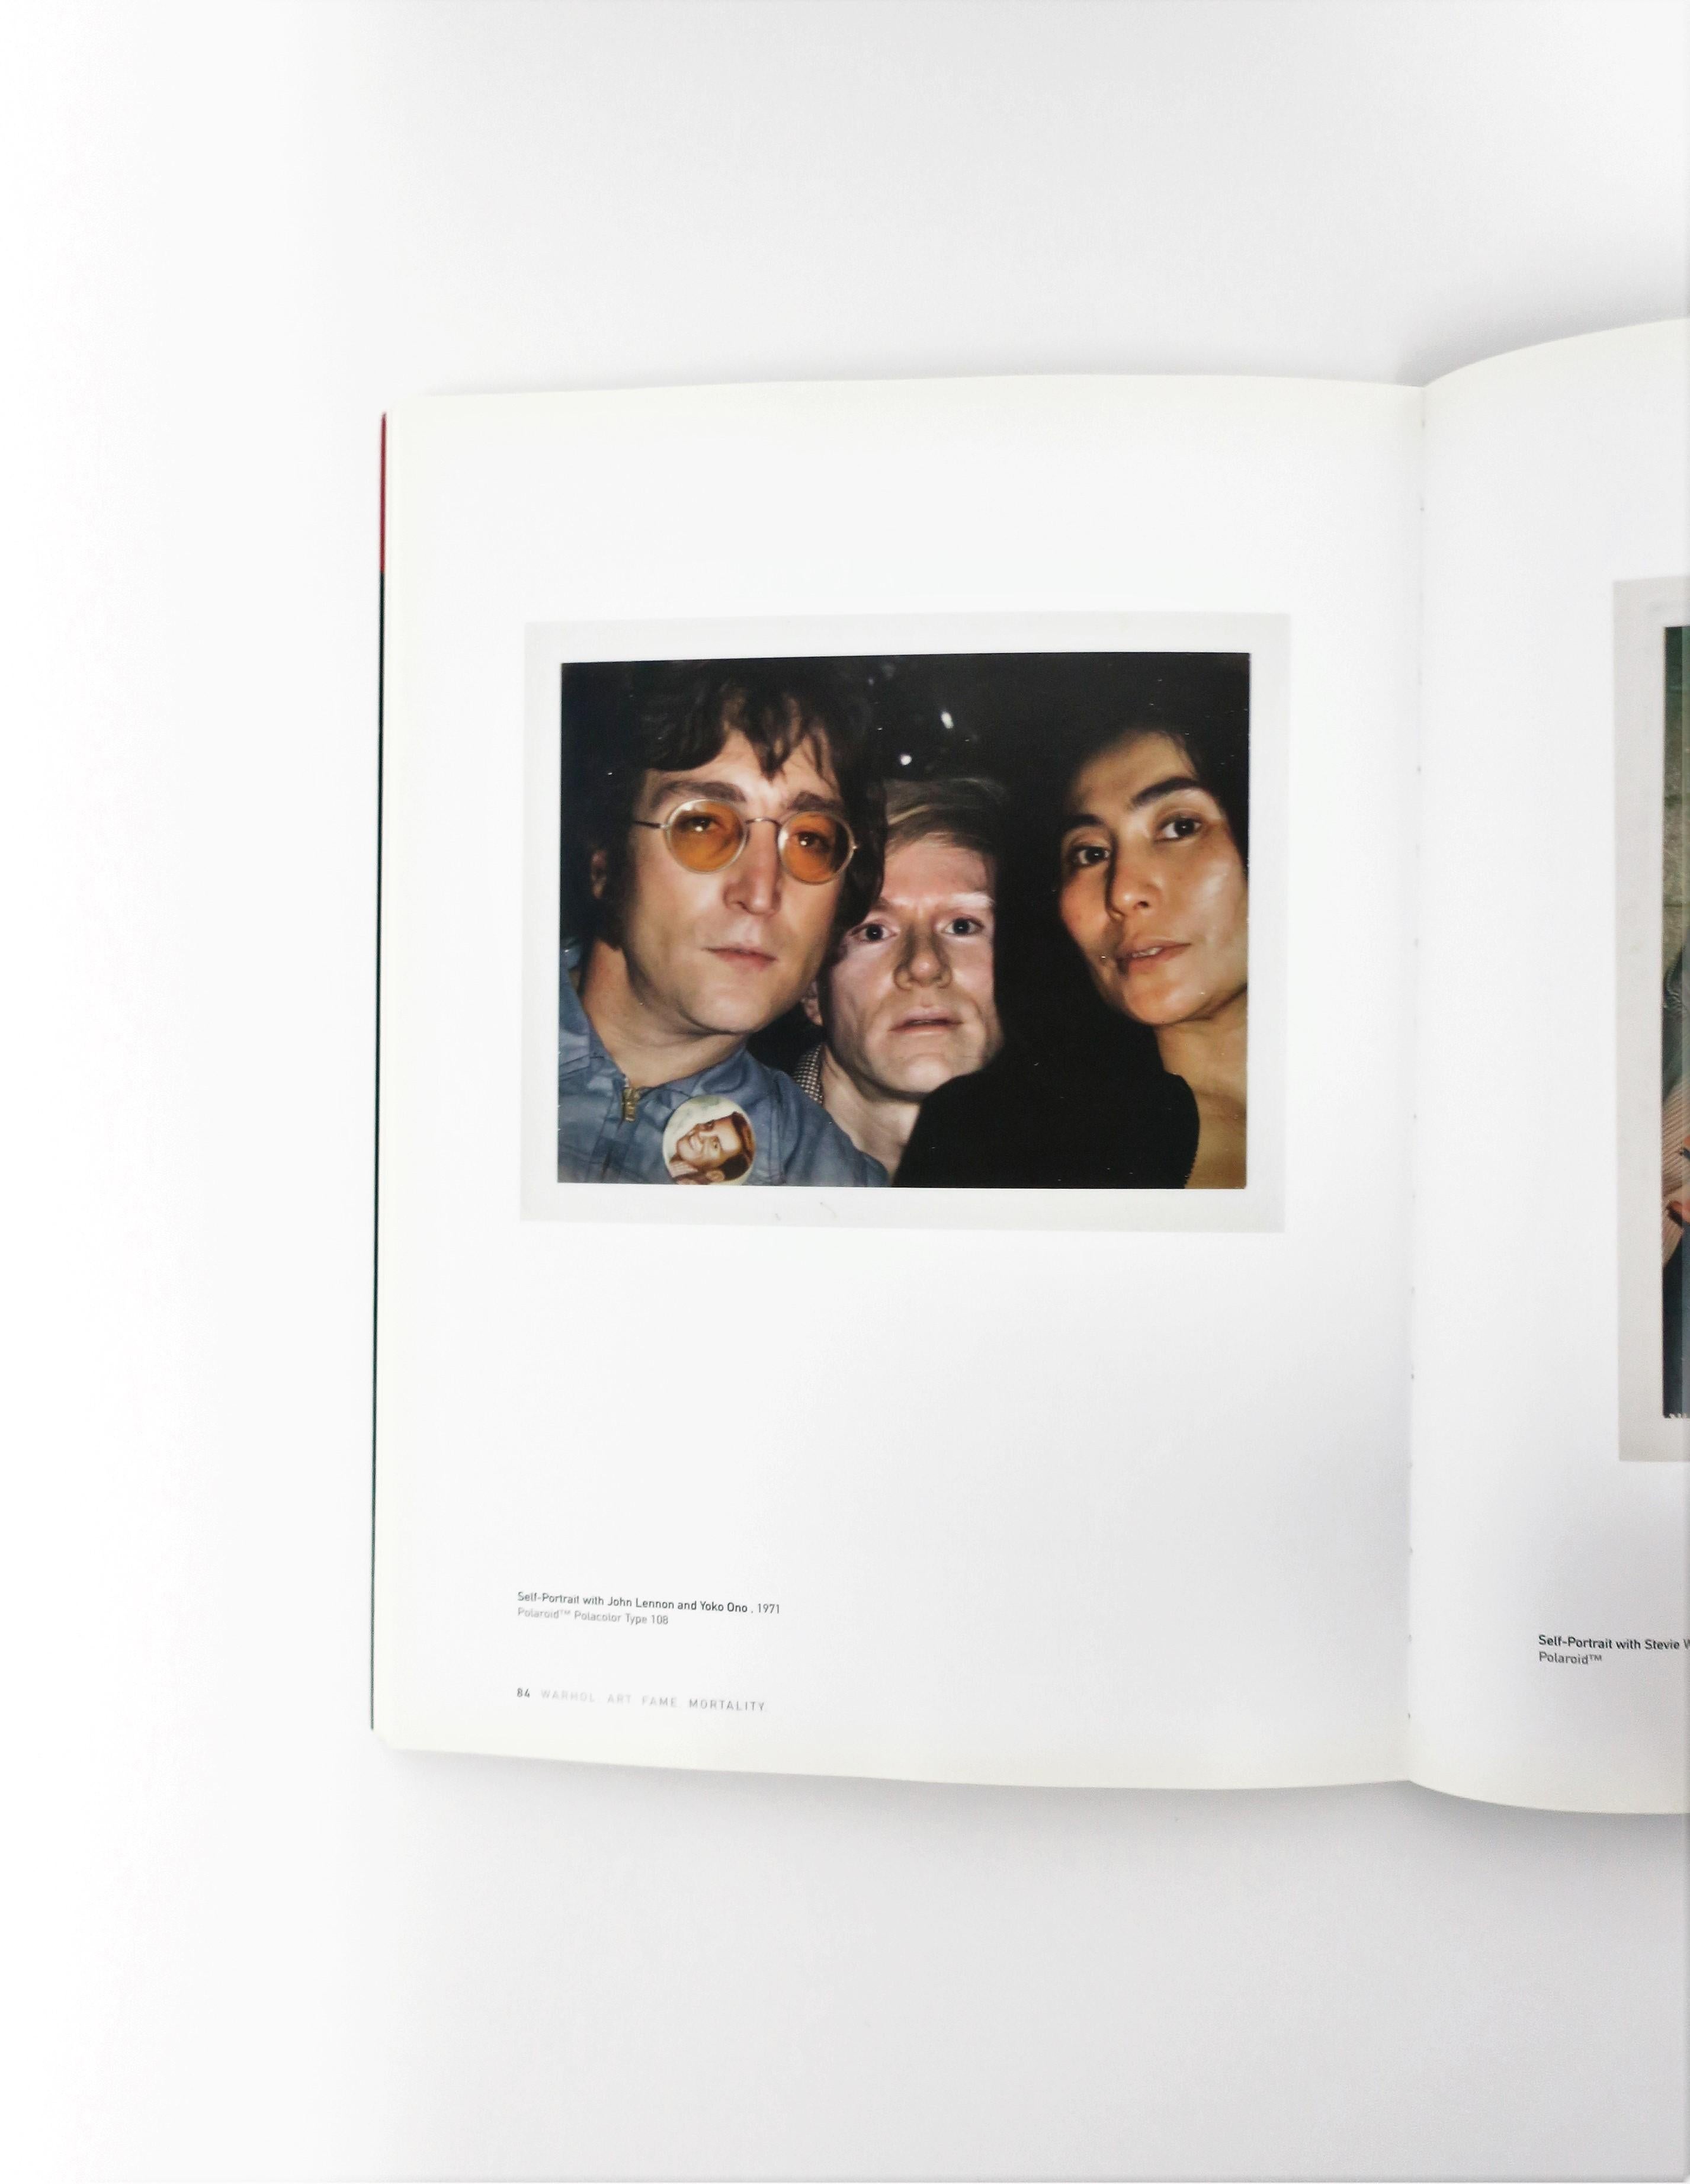 Warhol Art, Fame, Mortality, Exhibition Book 3